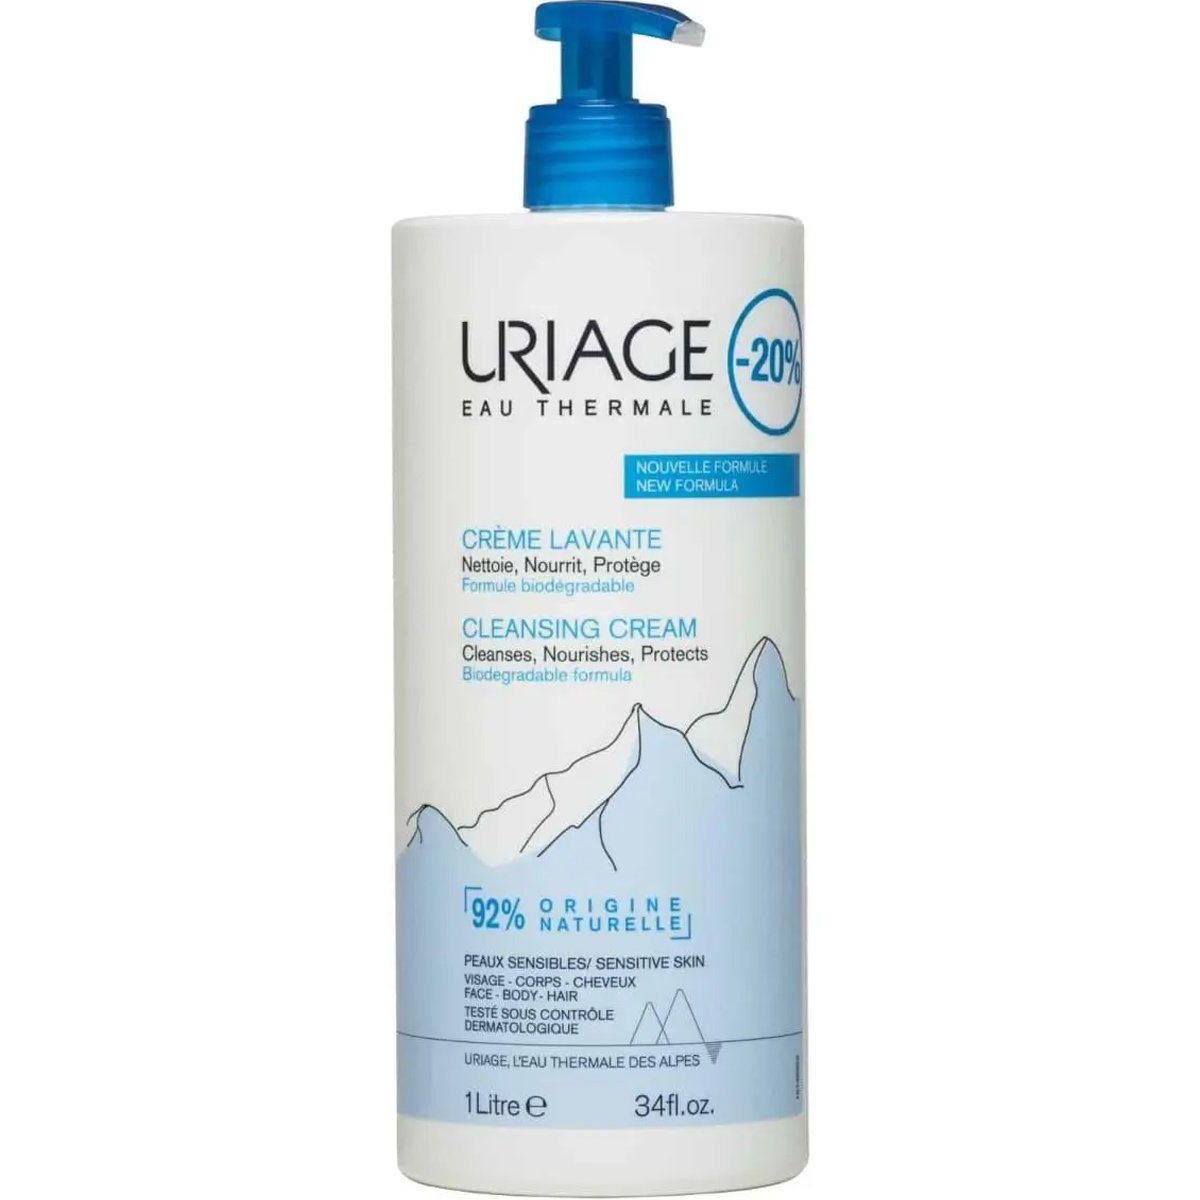 Uriage Cleansing Cream Κρέμα Καθαρισμού για Πρόσωπο, Σώμα & Μαλλιά Ιδανική για Ευαίσθητες Επιδερμίδες 1Lt σε Ειδική Τιμή